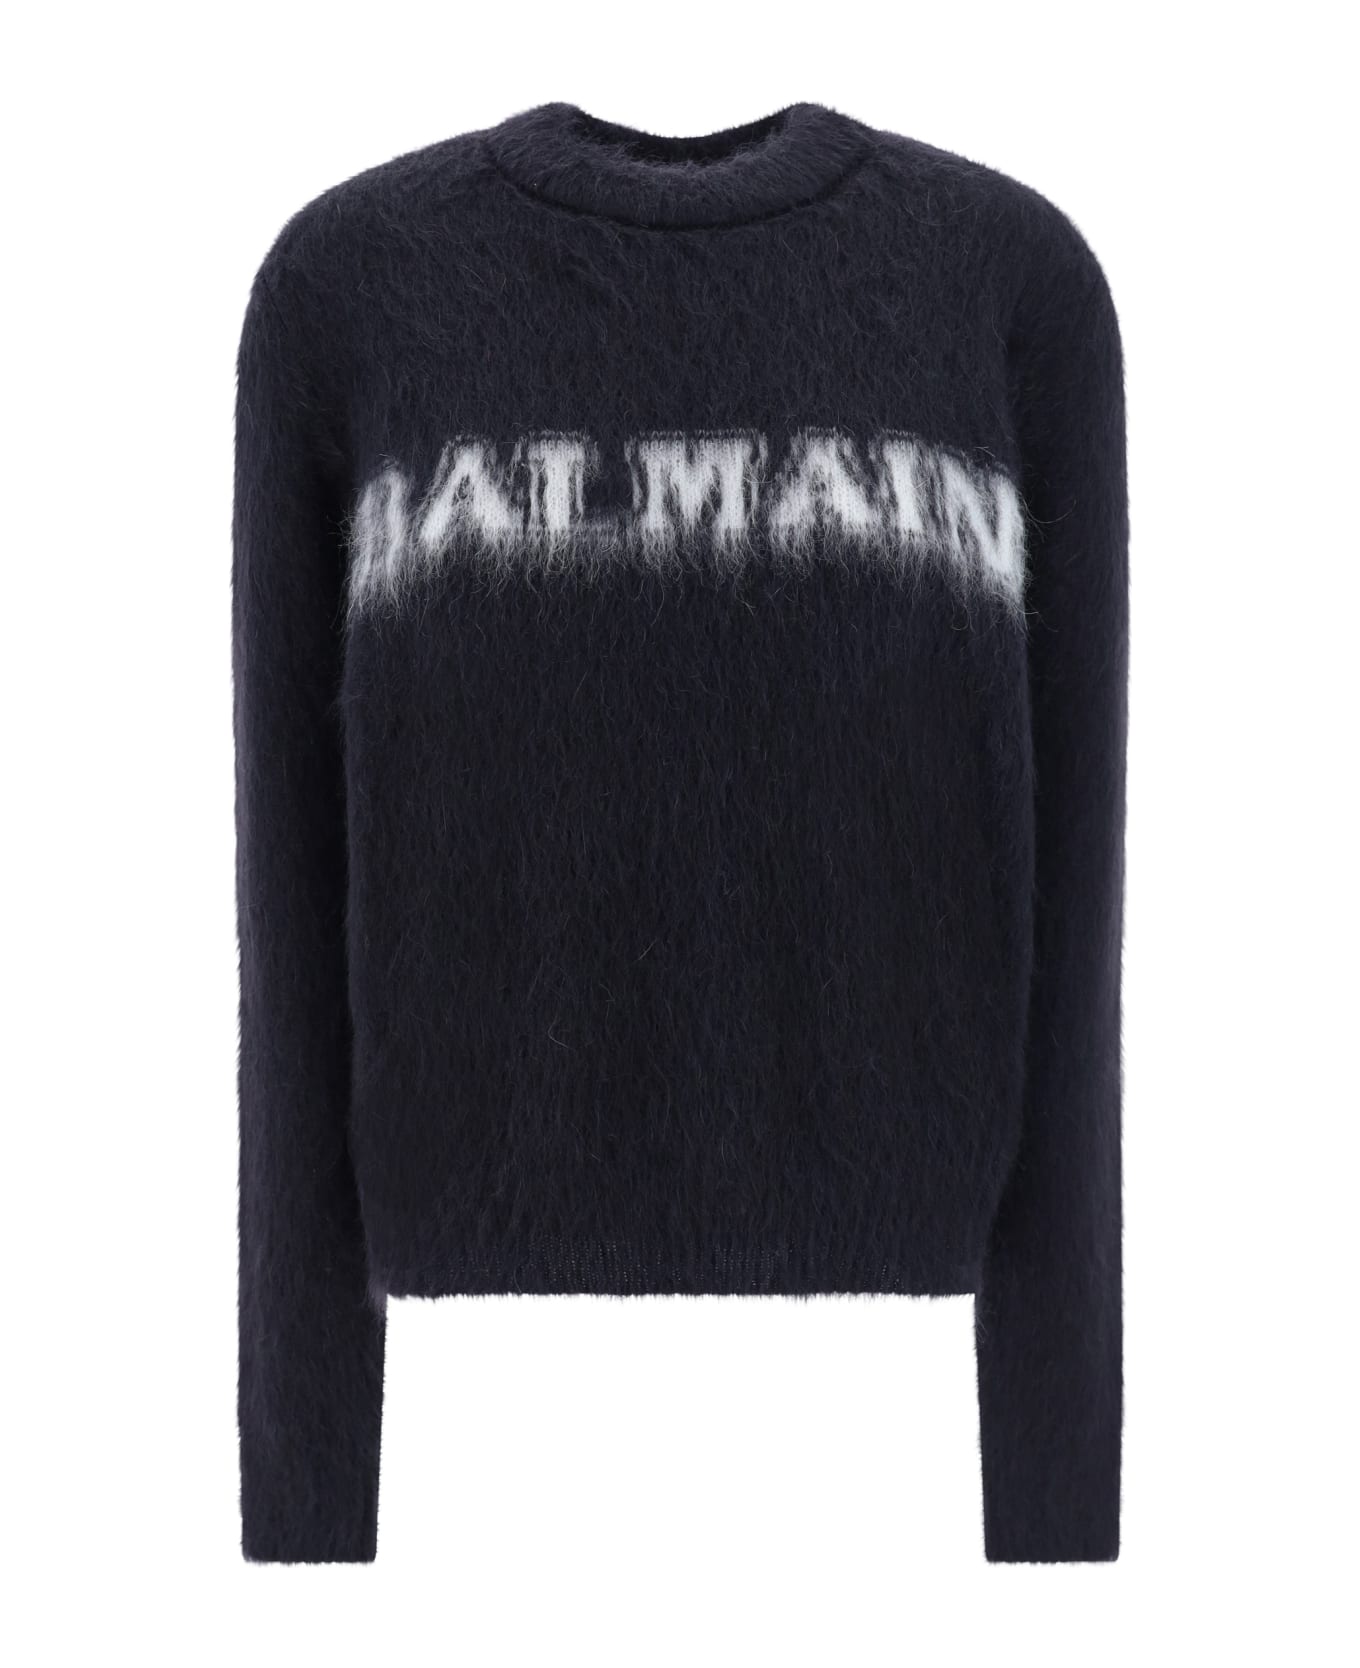 Balmain Sweater - Noir/blanc